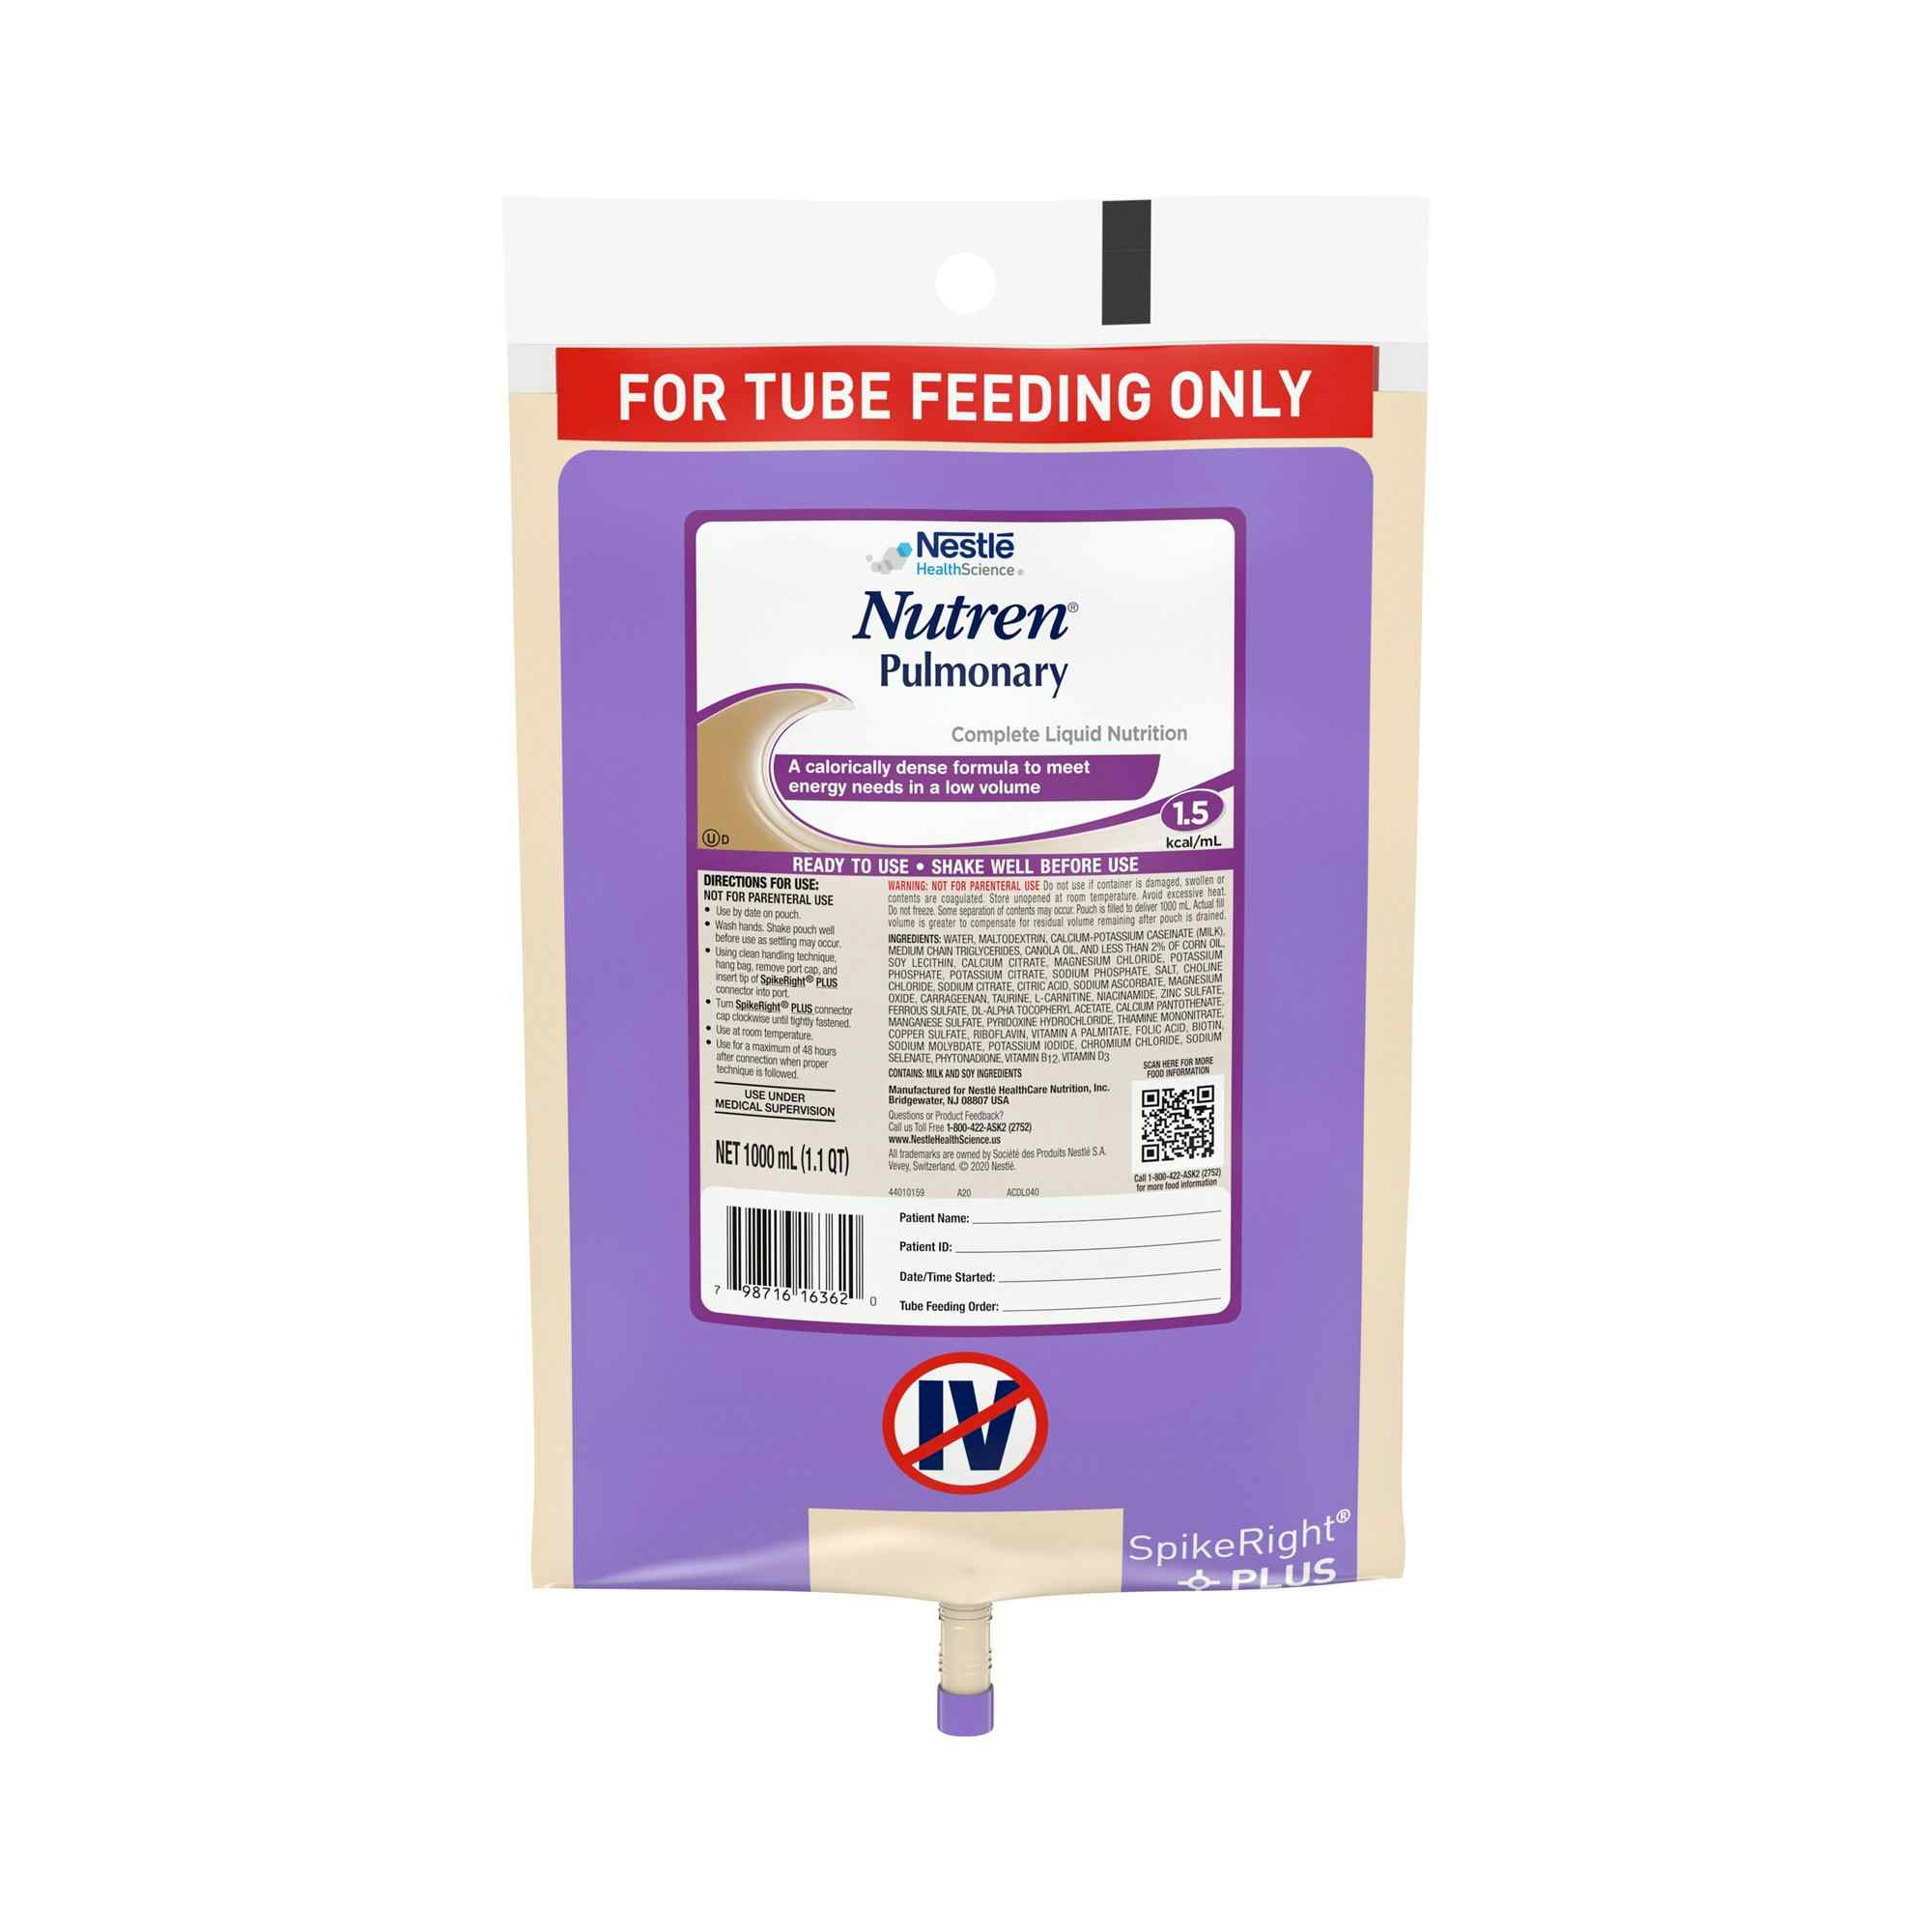 Nestle HealthScience Nutren Pulmonary Complete Liquid Nutrition Tube Feeding Formula, 33.8 oz., 10798716223925, Case of 6